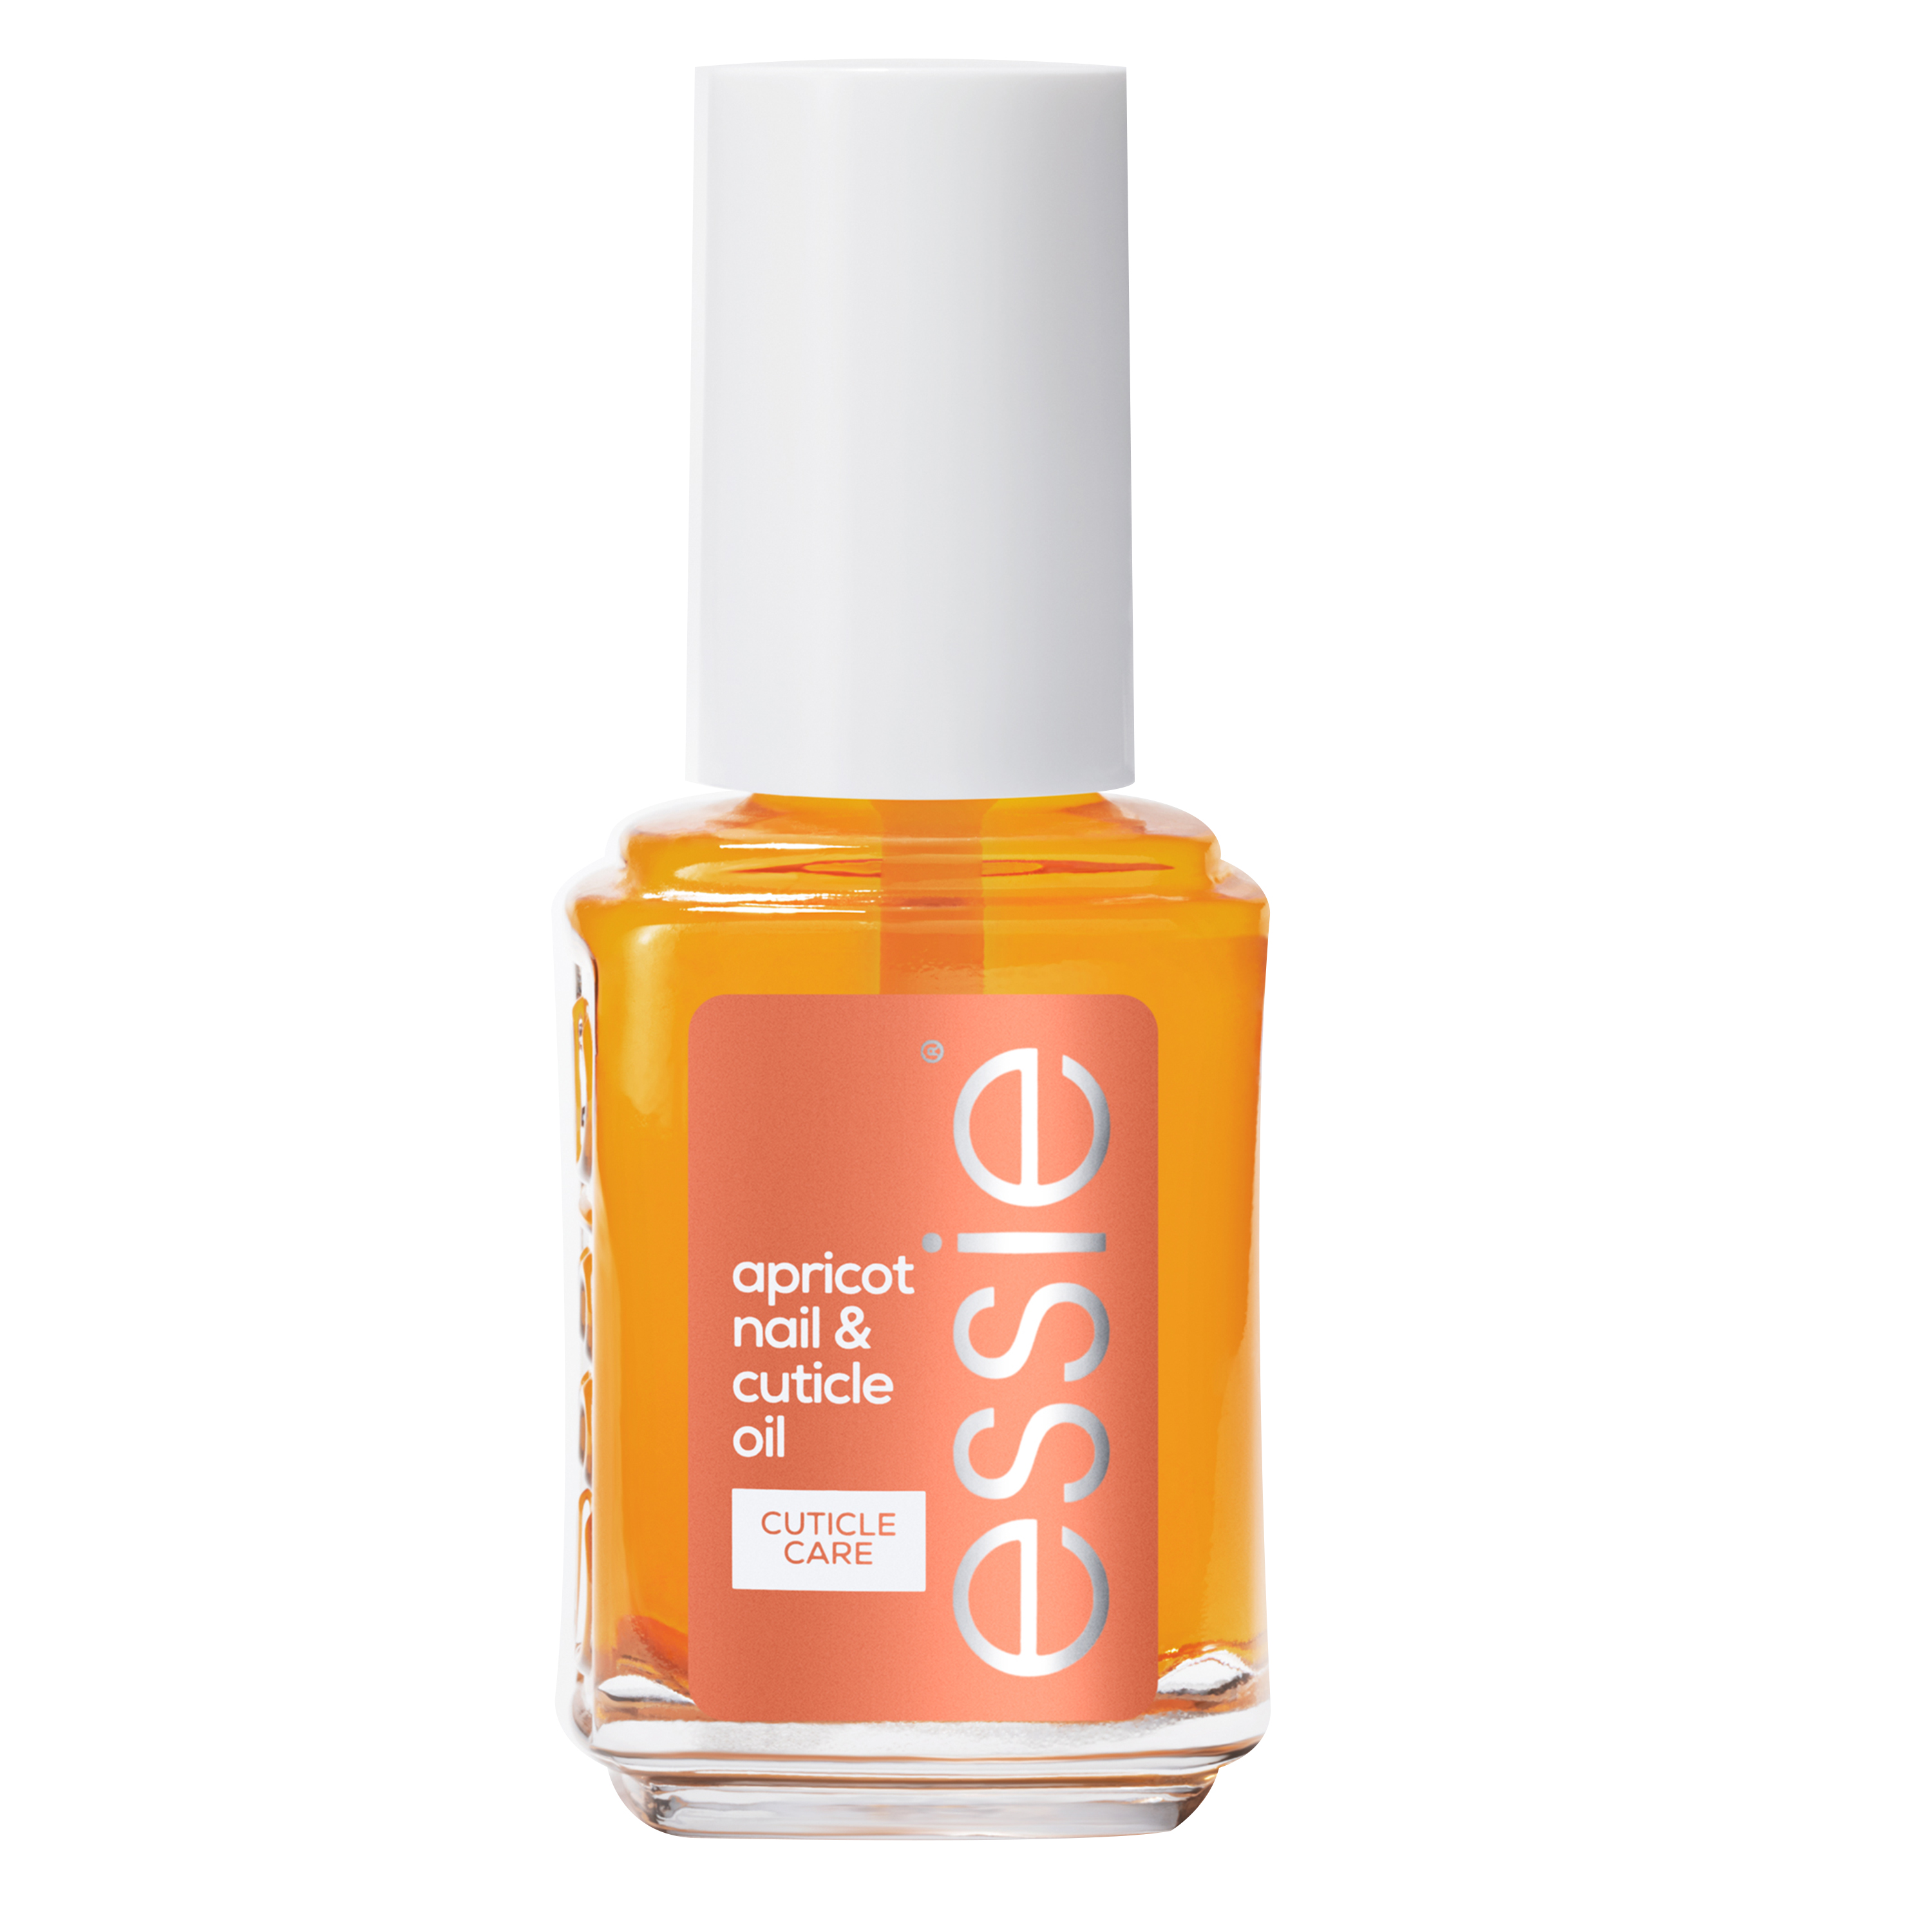 Care Essie & Apricot Oil Nail Cuticle Nail